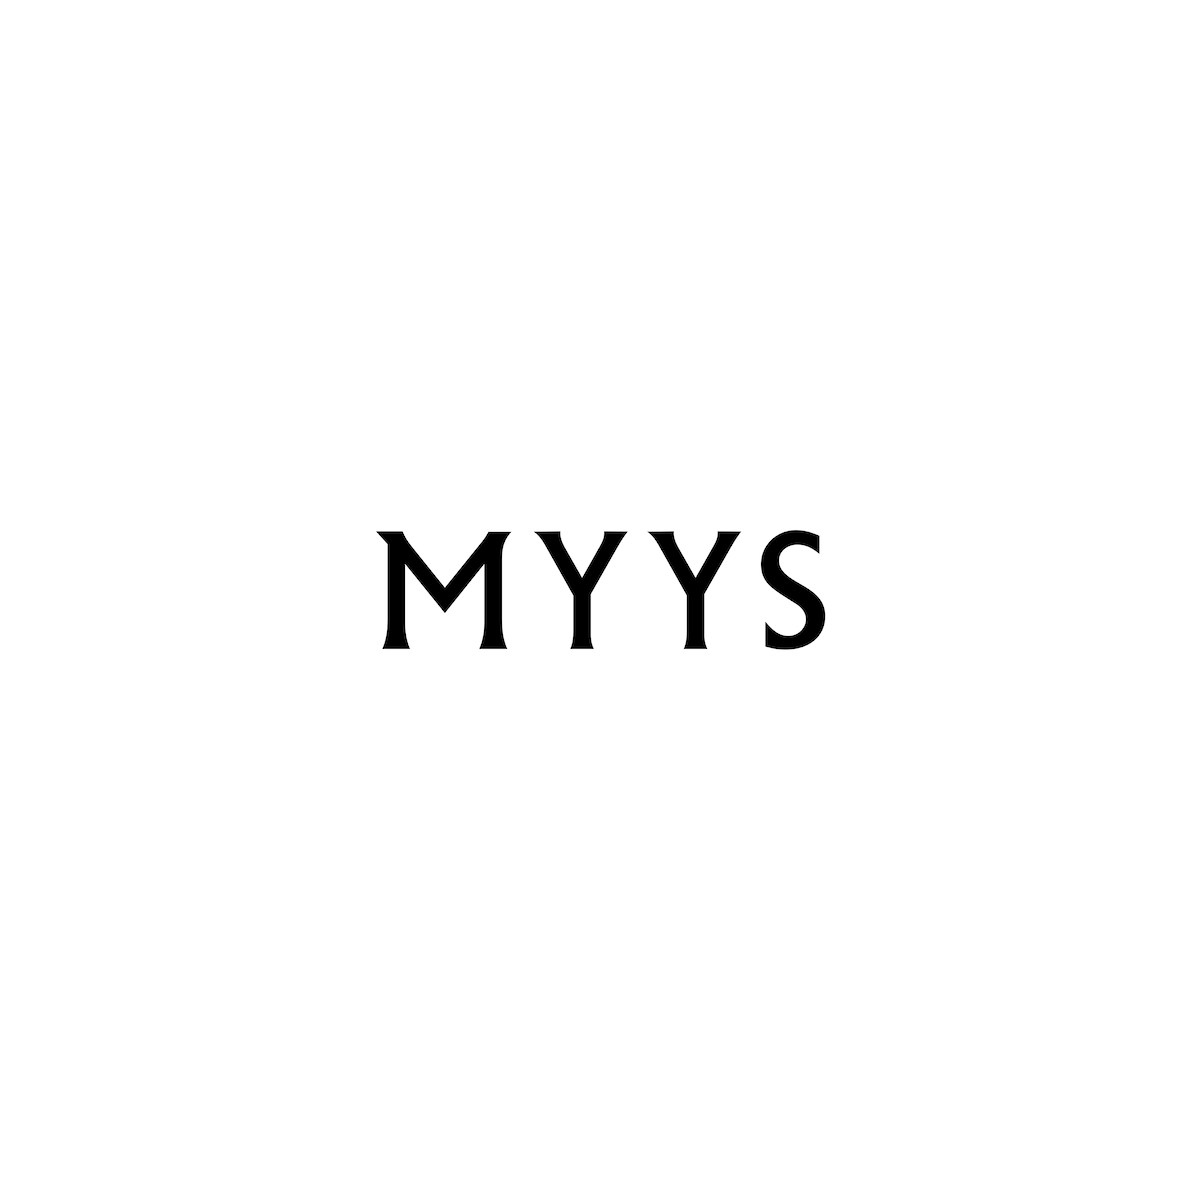 MYYS